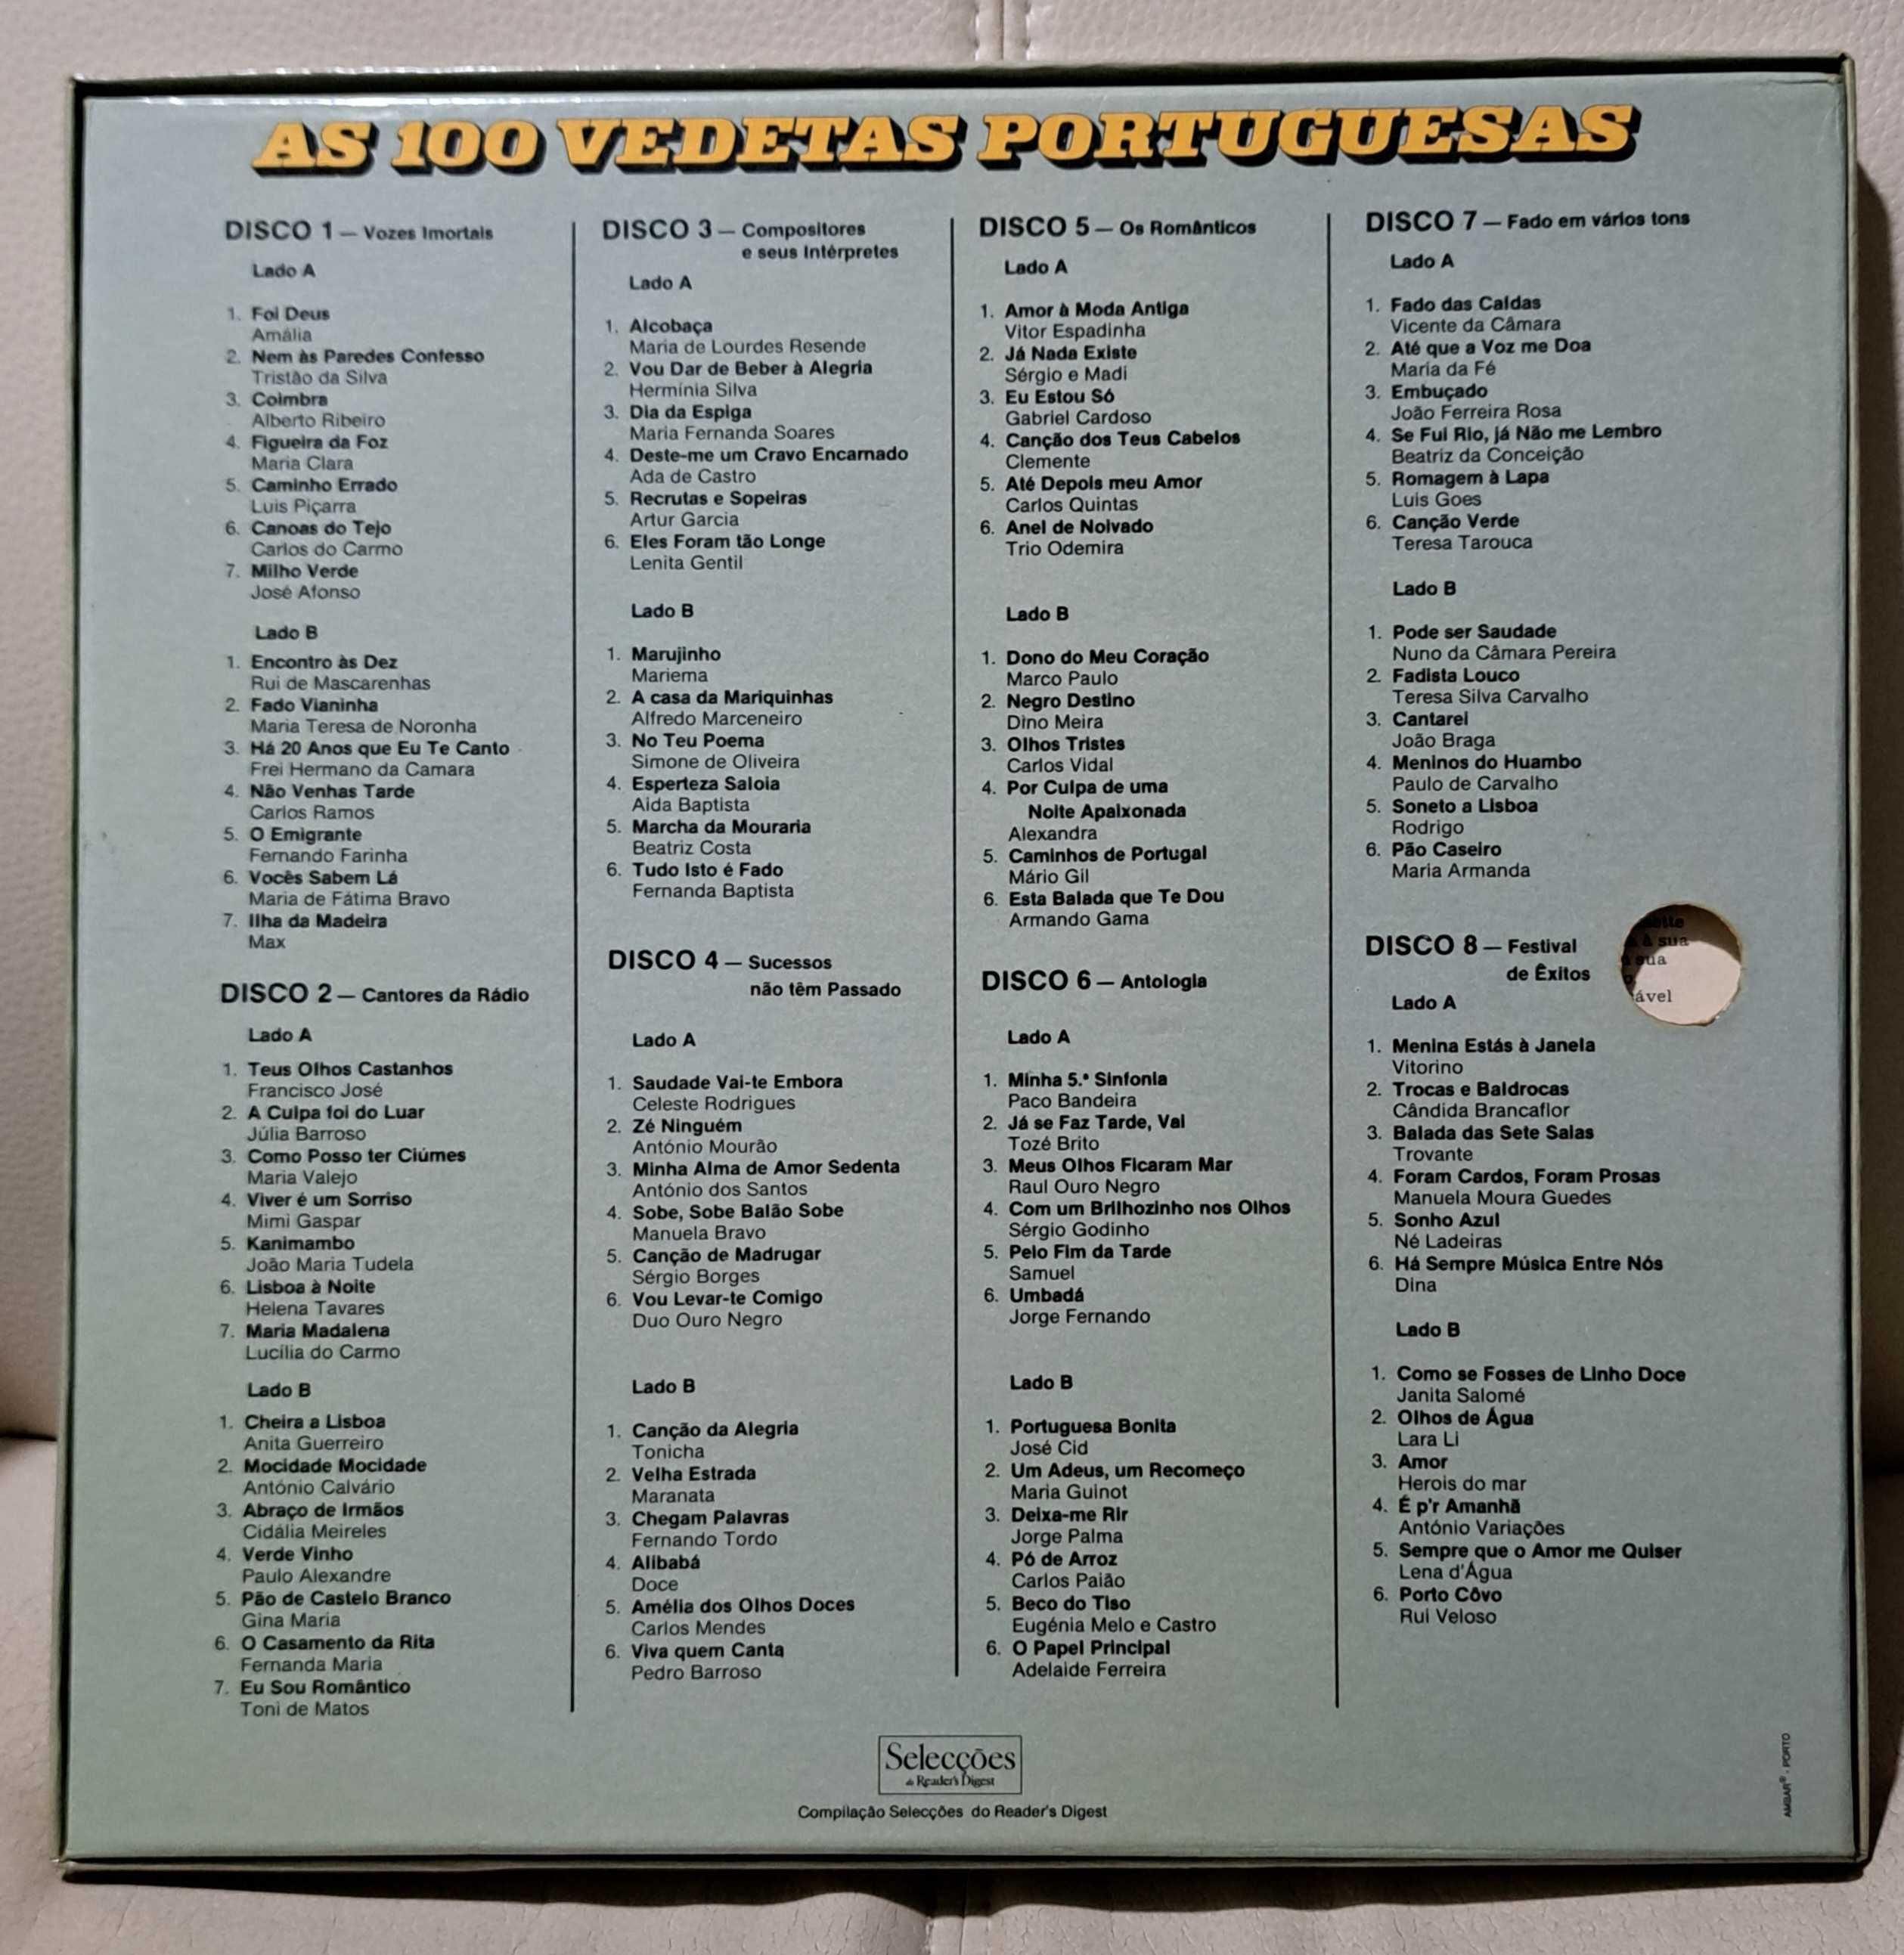 Coletânea "As 100 vedetas portuguesas", 8 discos vinil